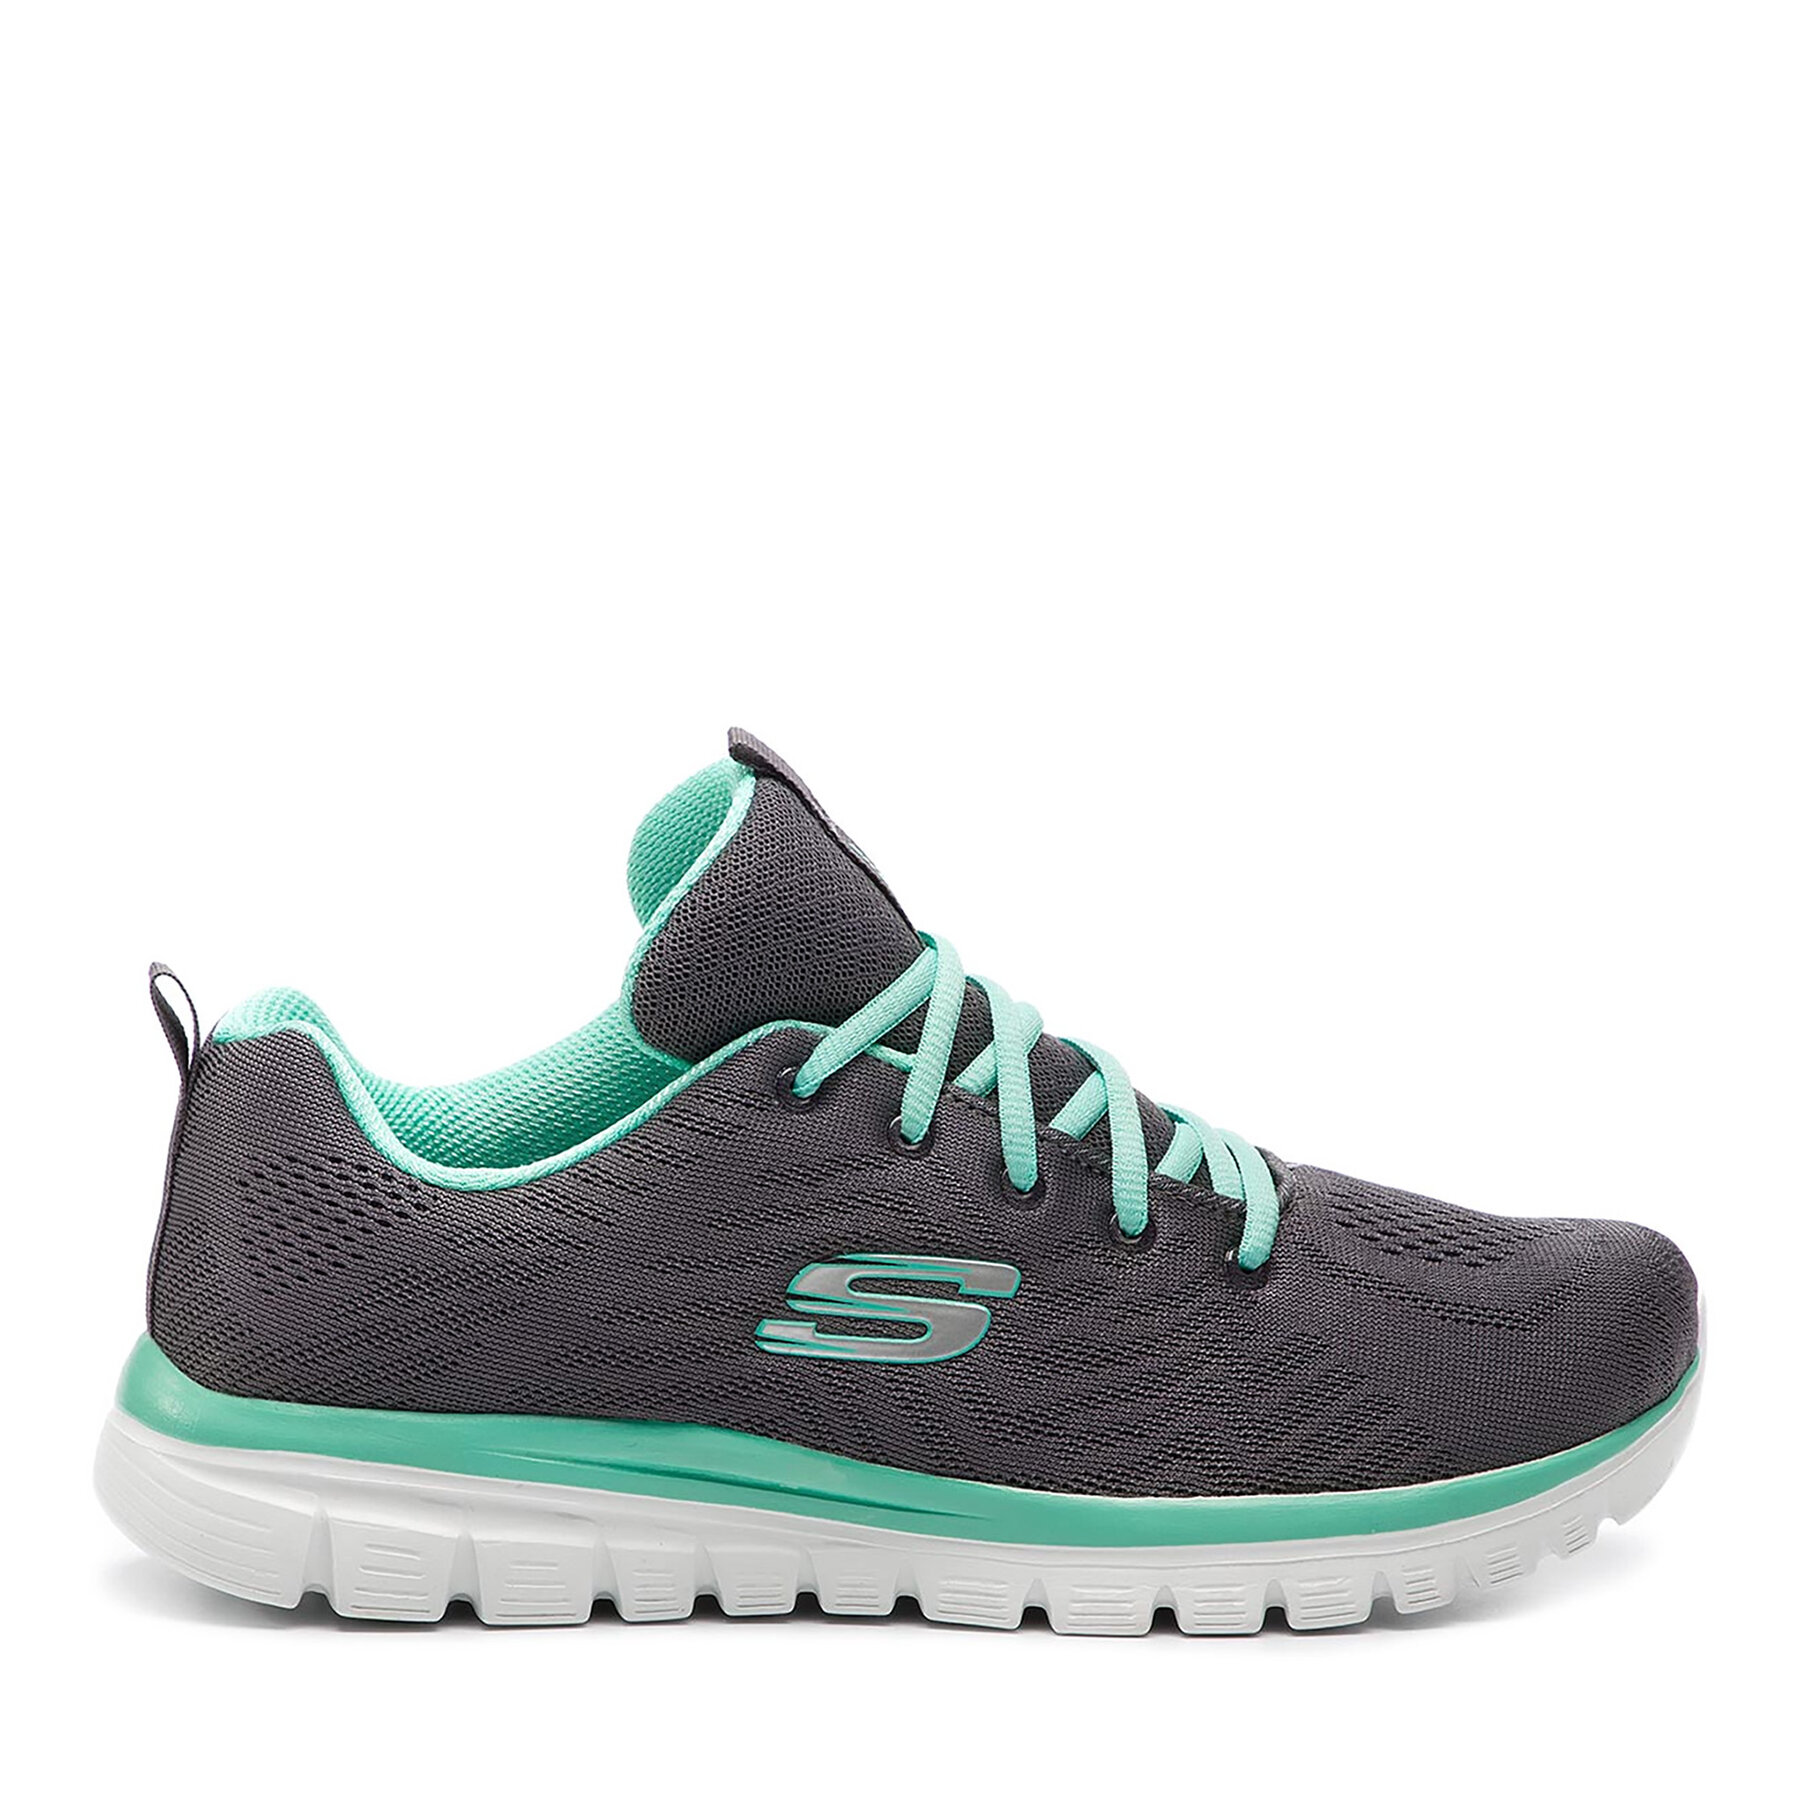 Schuhe Skechers Get Connected 12615/CCGR Charcoal/Green von Skechers